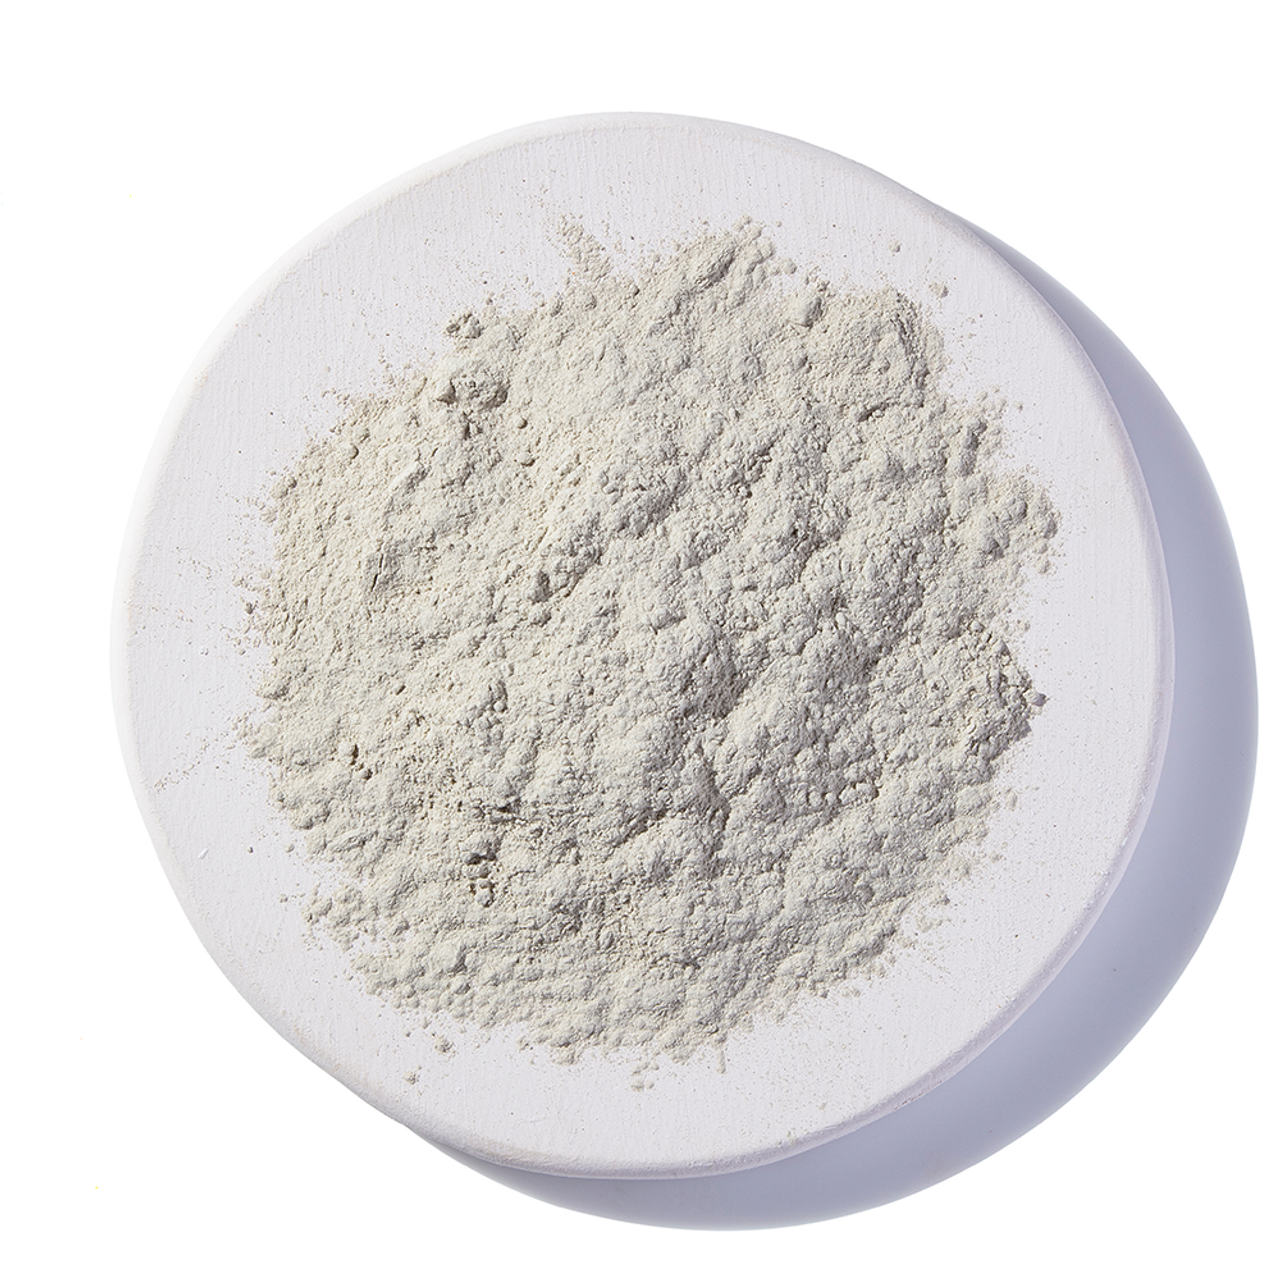  SMART SOLUTIONS Calcium Bentonite Clay Food Grade, 2